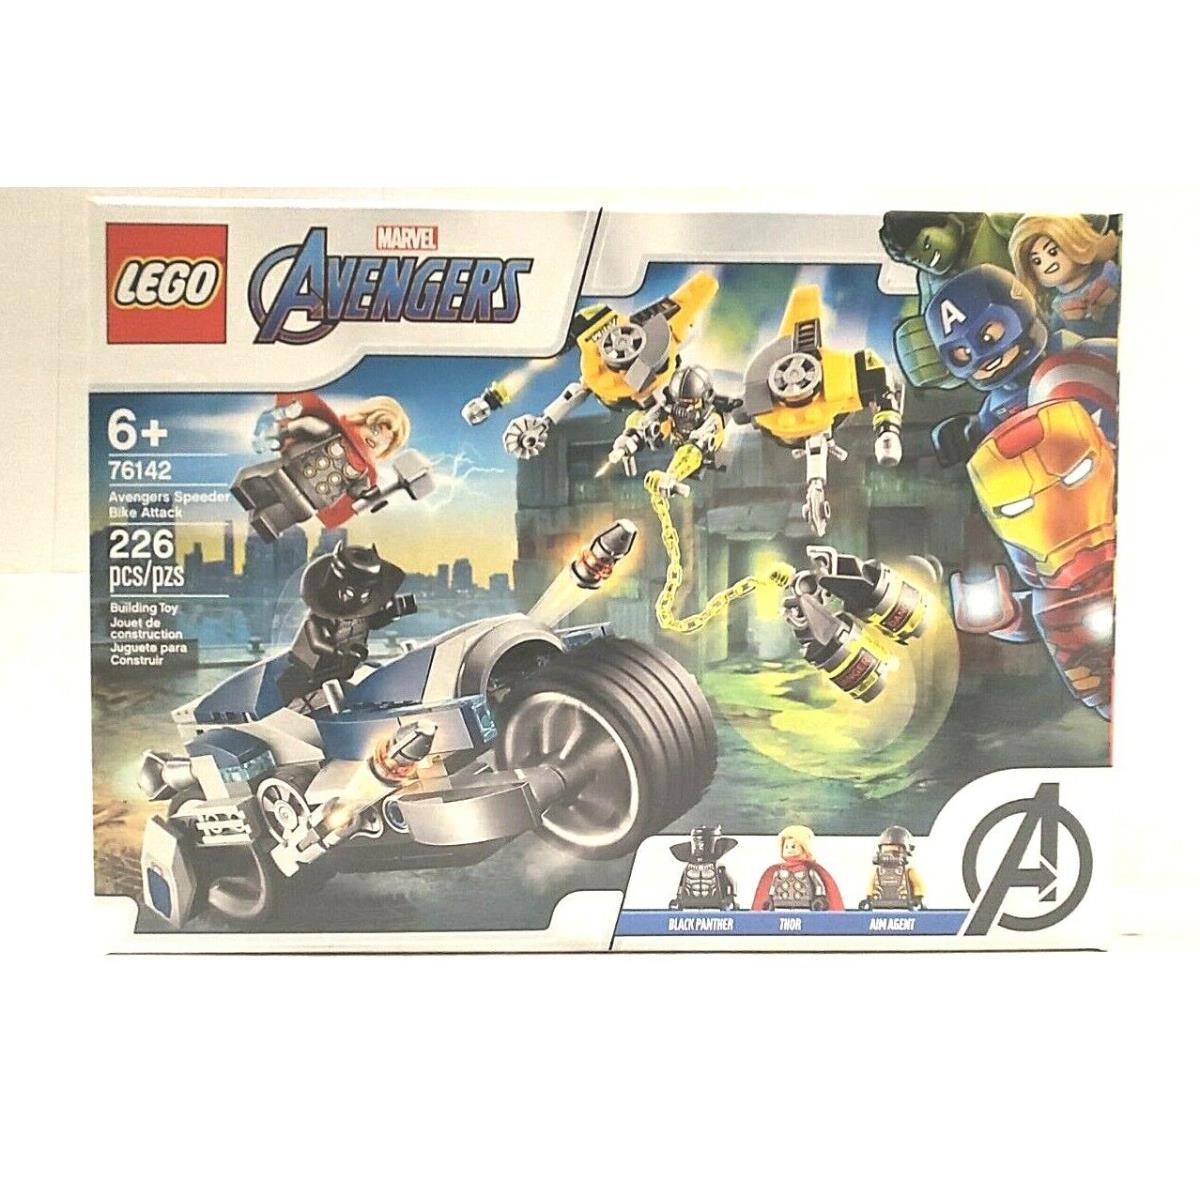 Lego 76142 Marvel Avengers Speeder Bike Attack 226 Piece Building Set Toy 2020